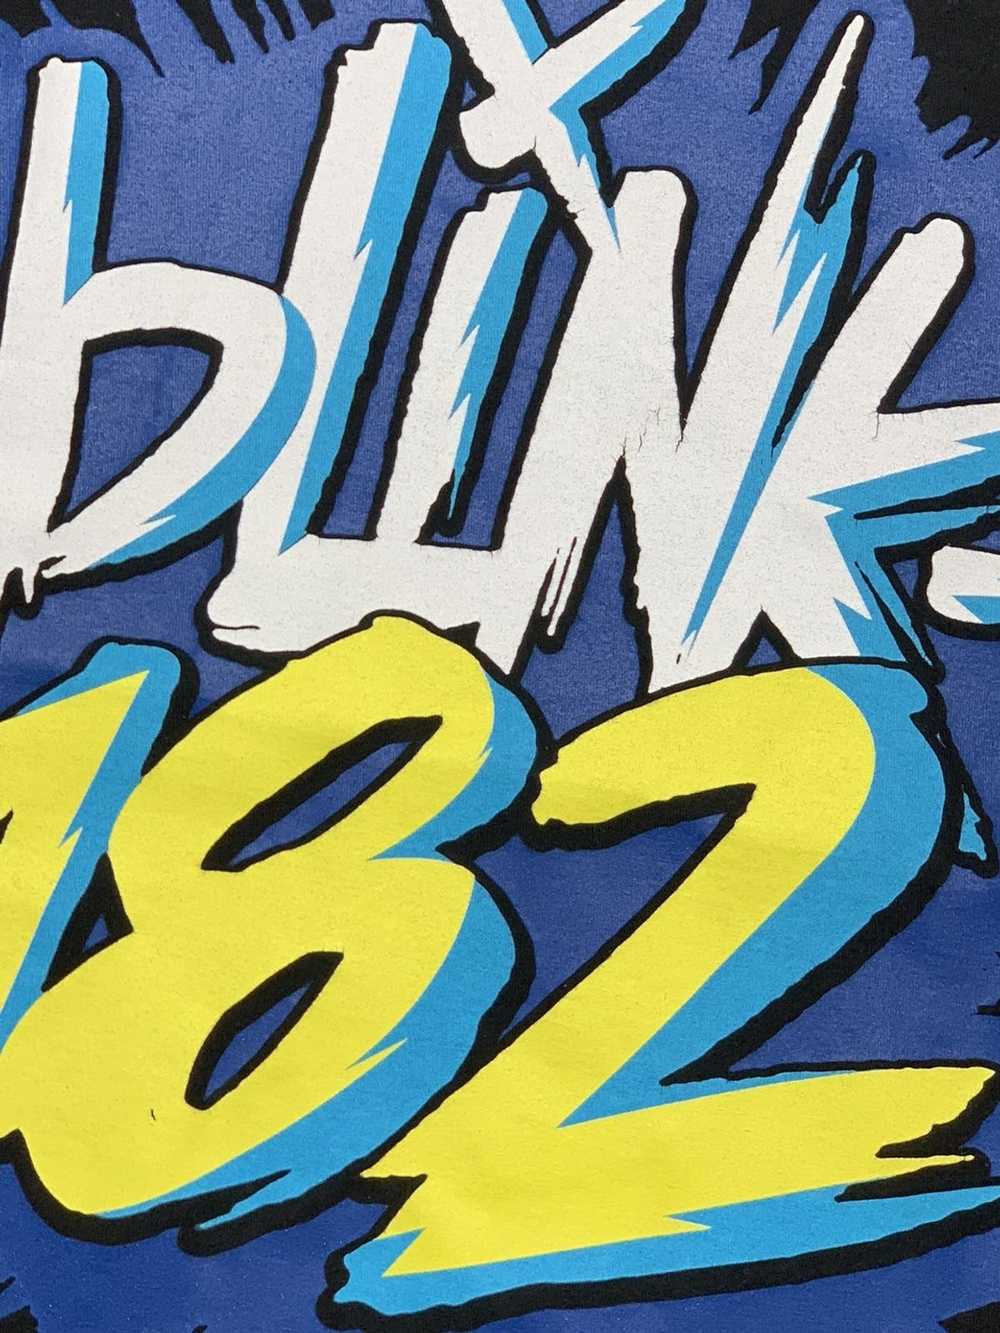 Tultex Blink 182 Band T-Shirt - image 2